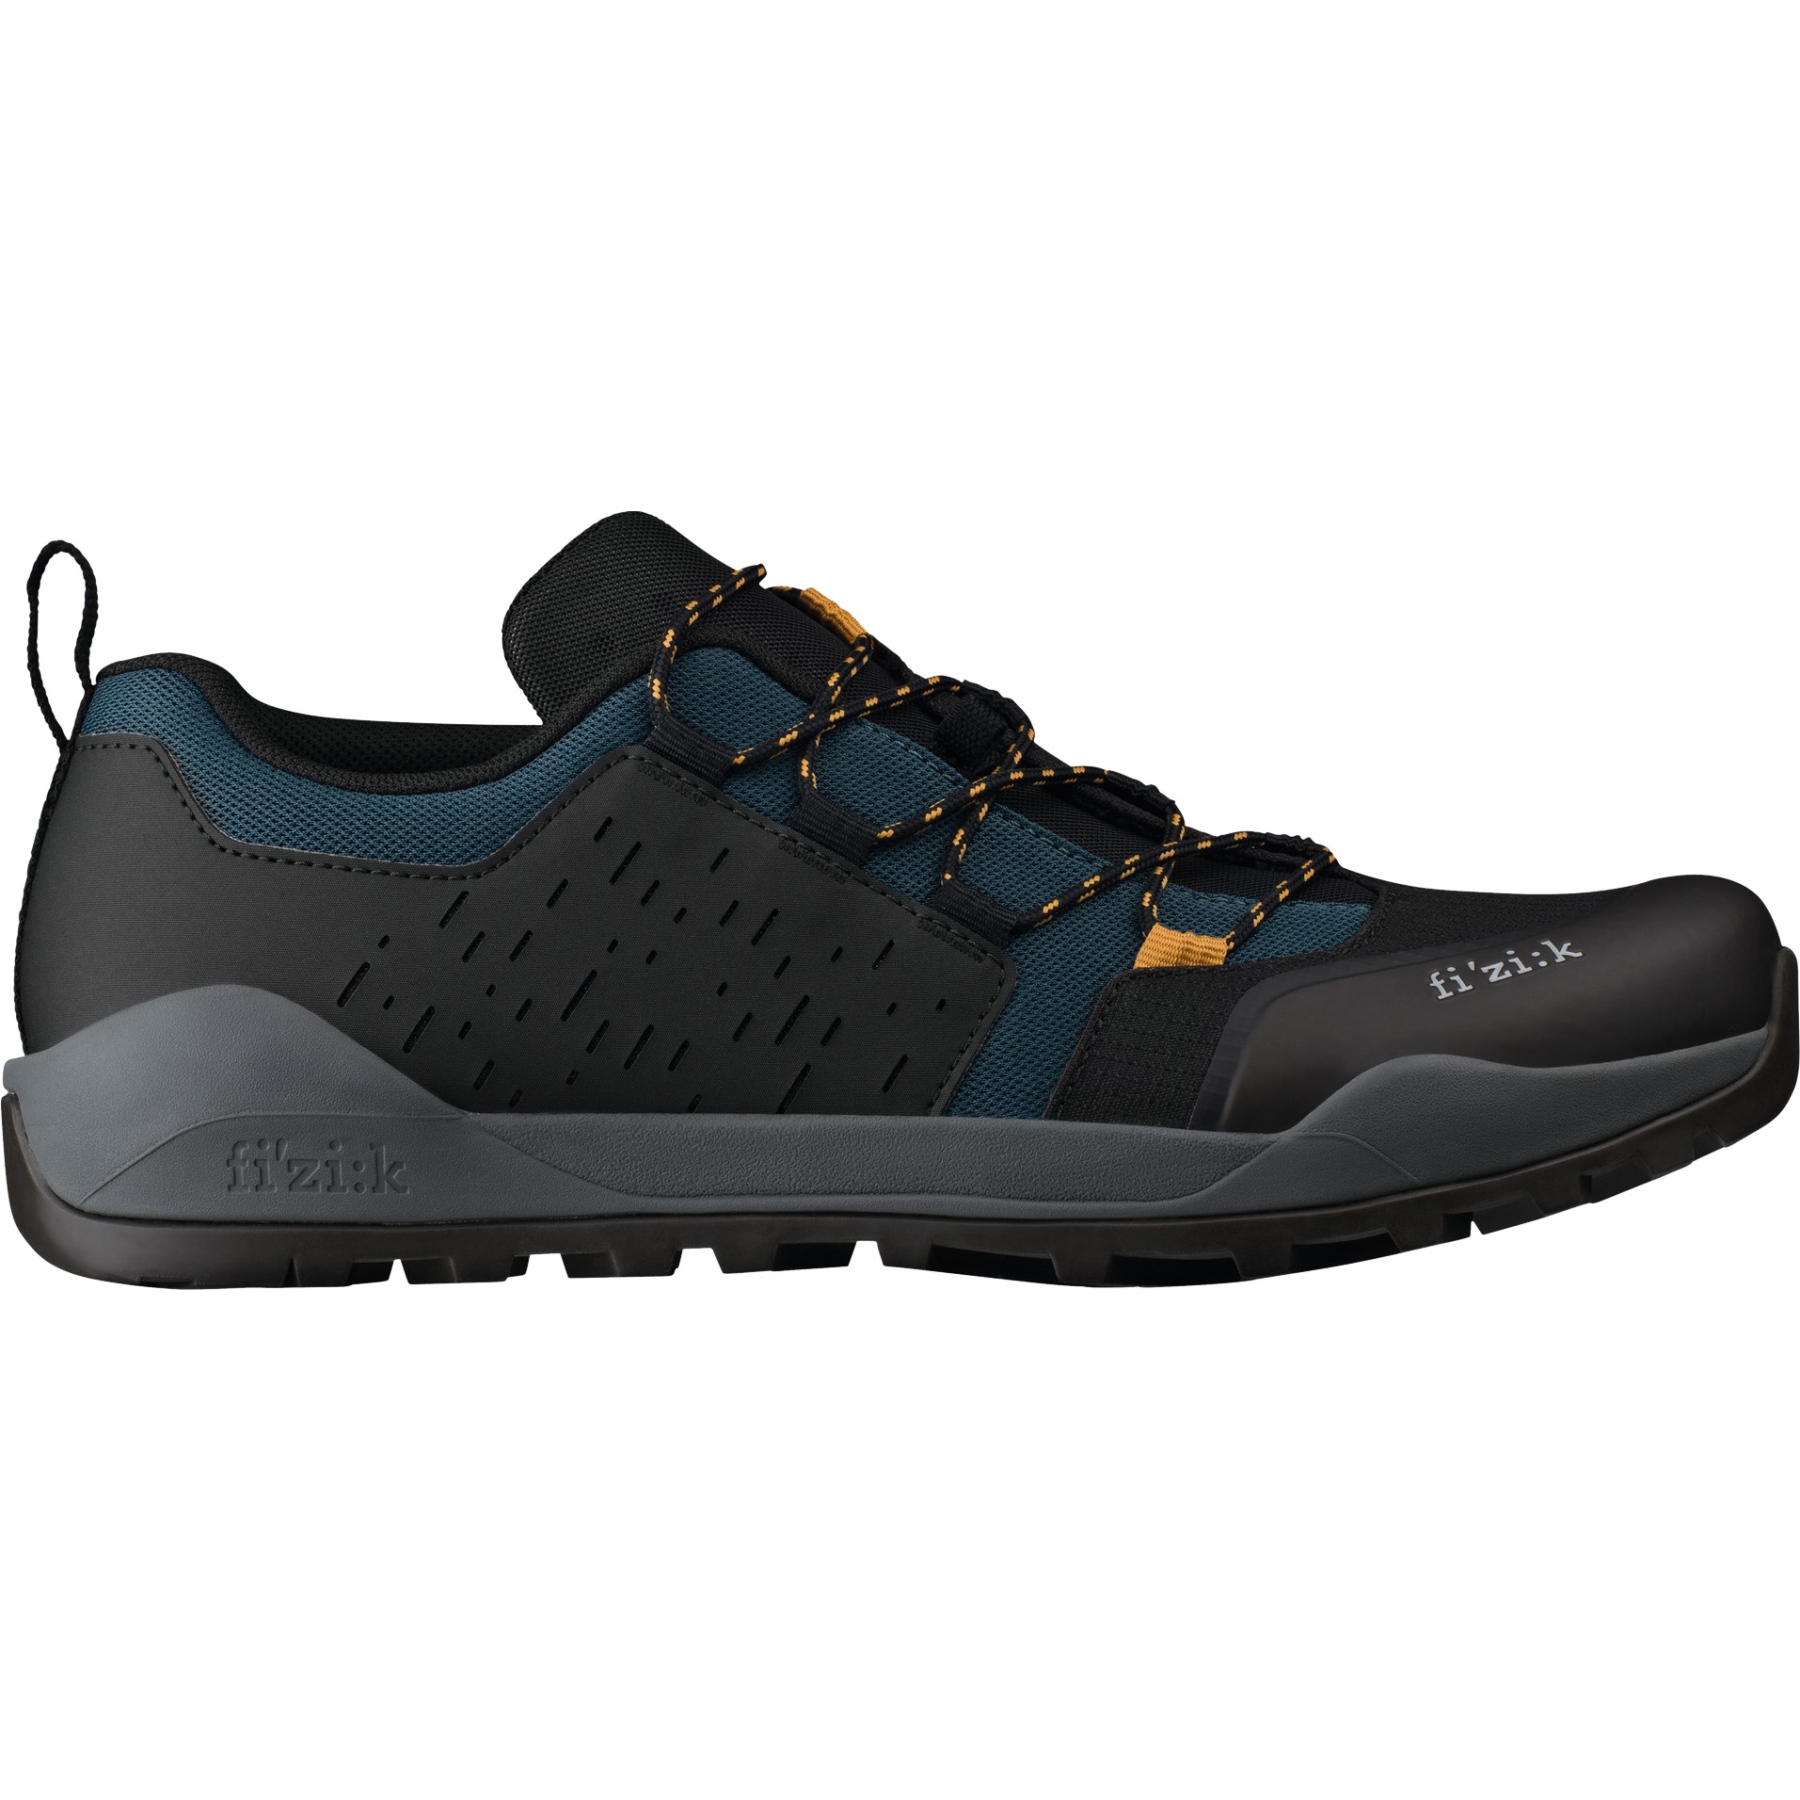 Picture of Fizik Terra Ergolace X2 MTB Shoes - teal blue/Black